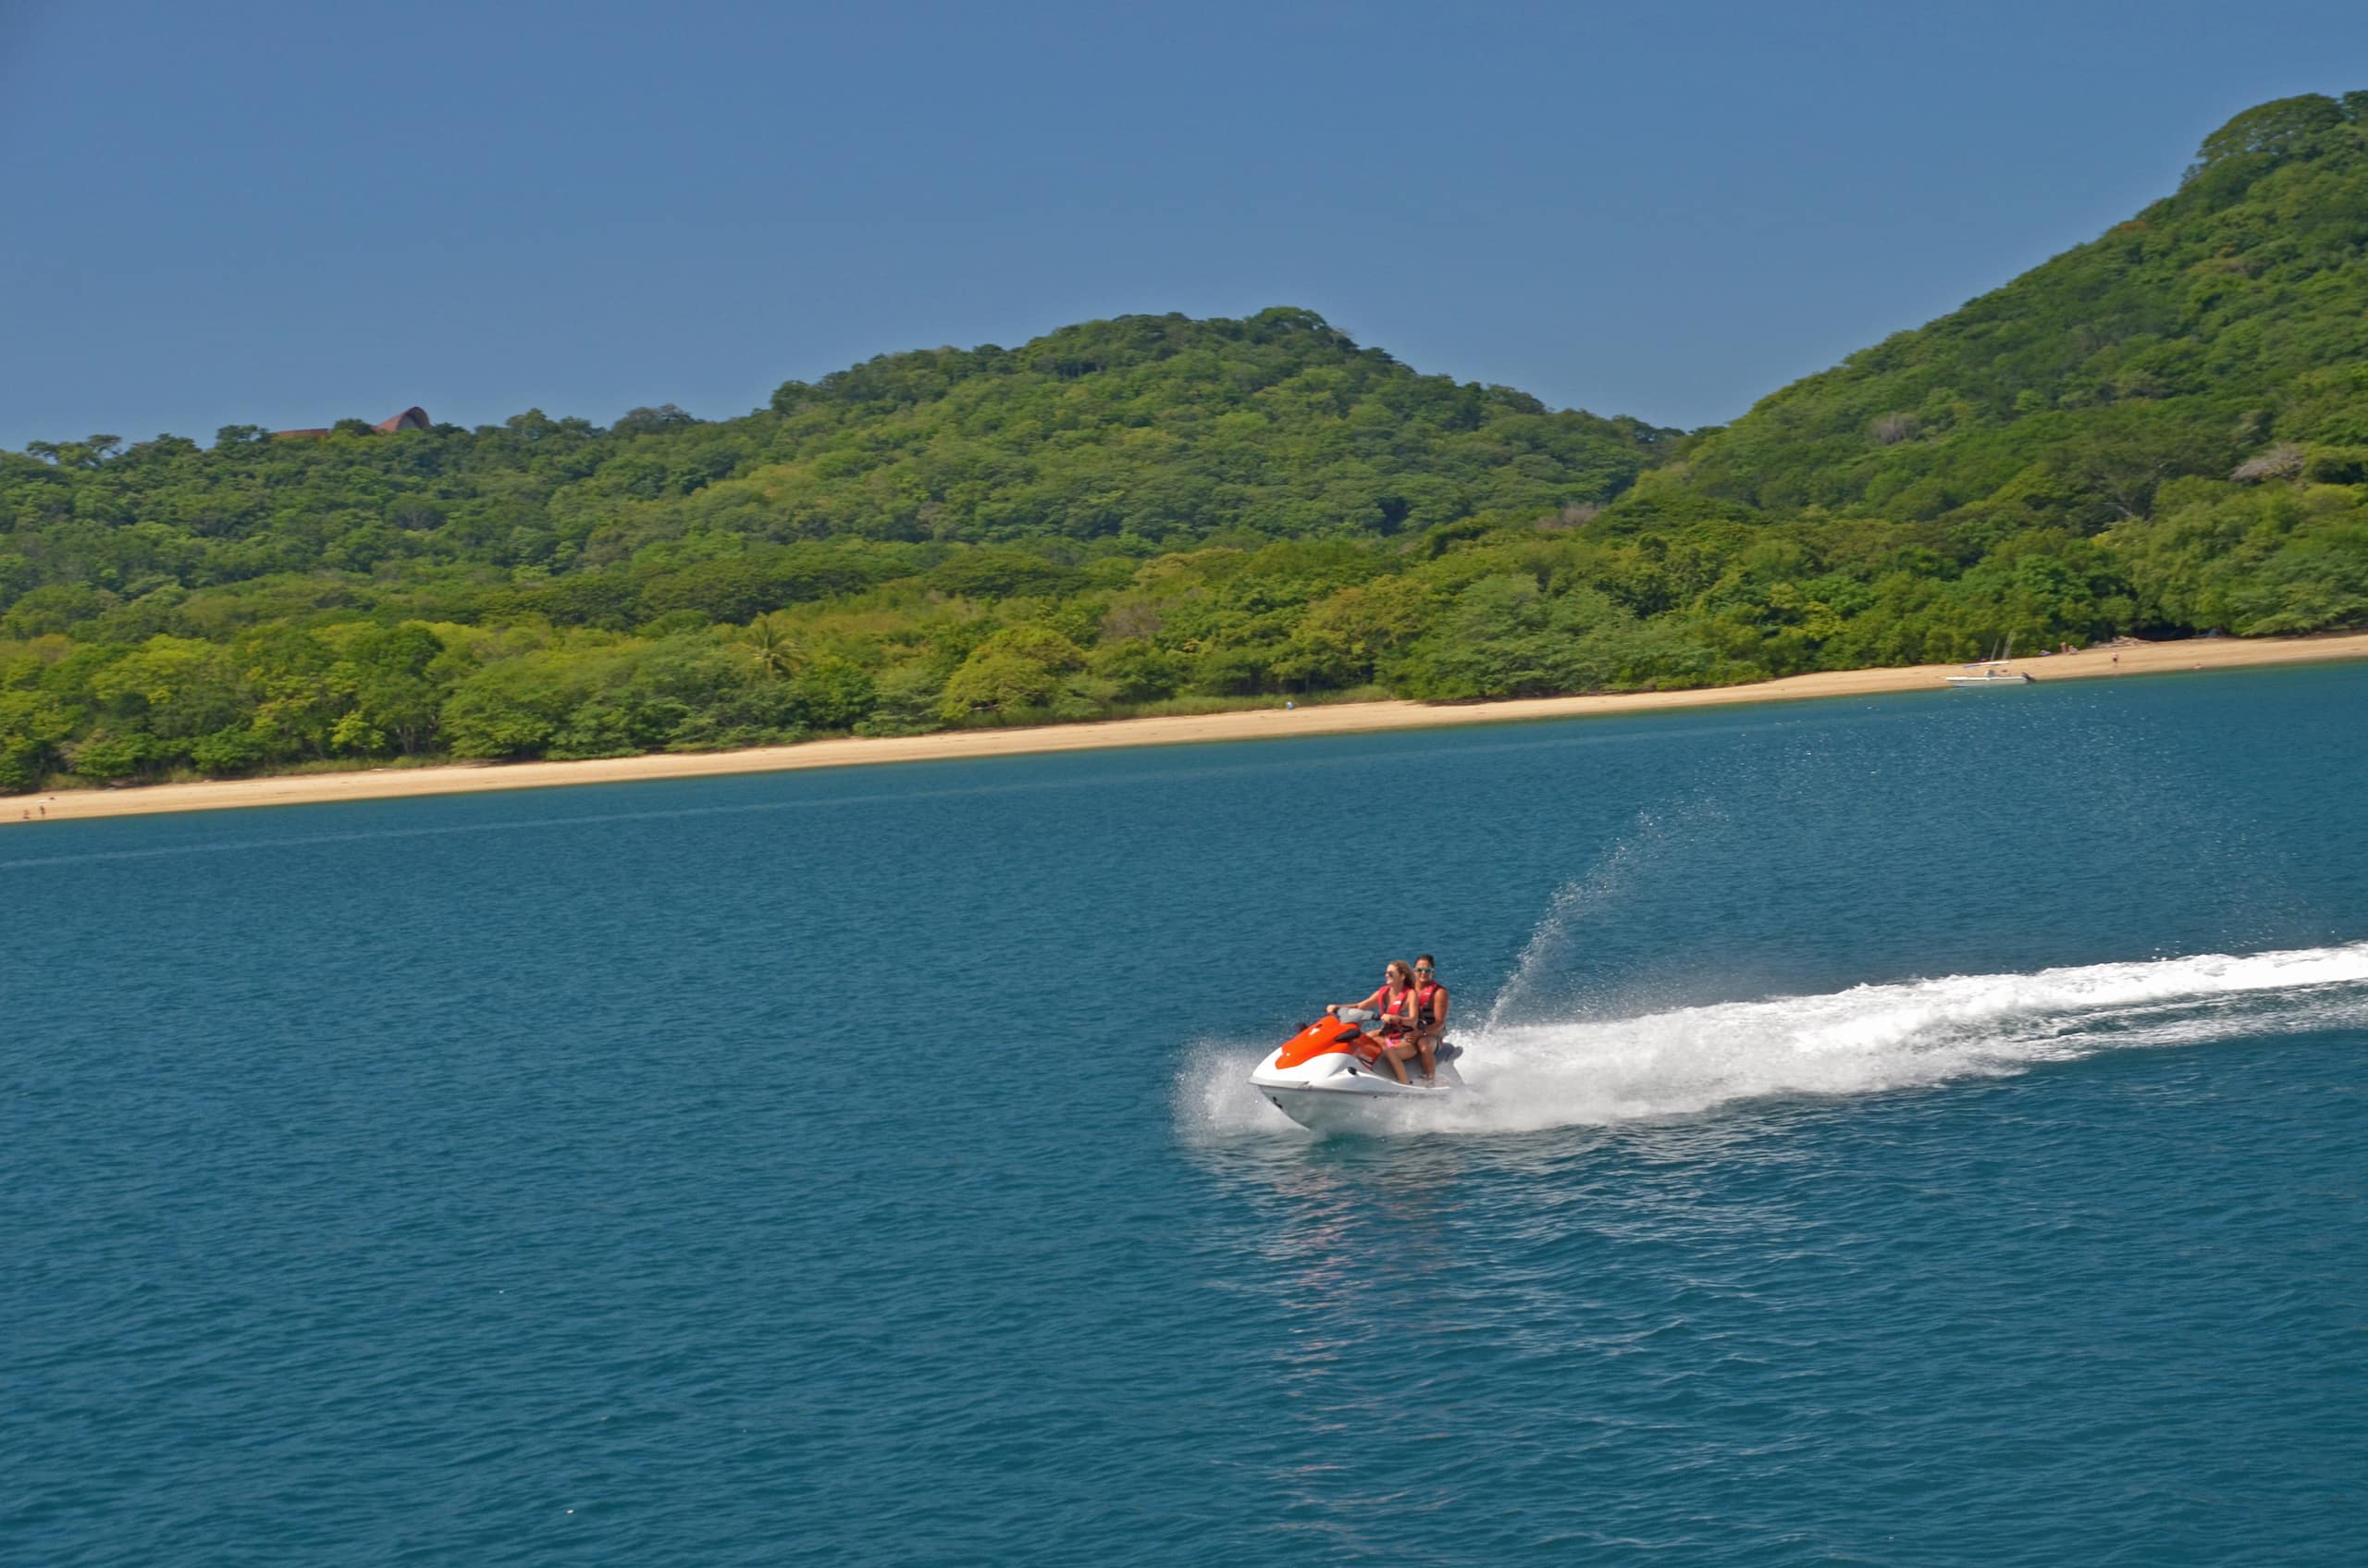 Andaz Costa Rica Resort at Peninsula Papagayo Jet Ski